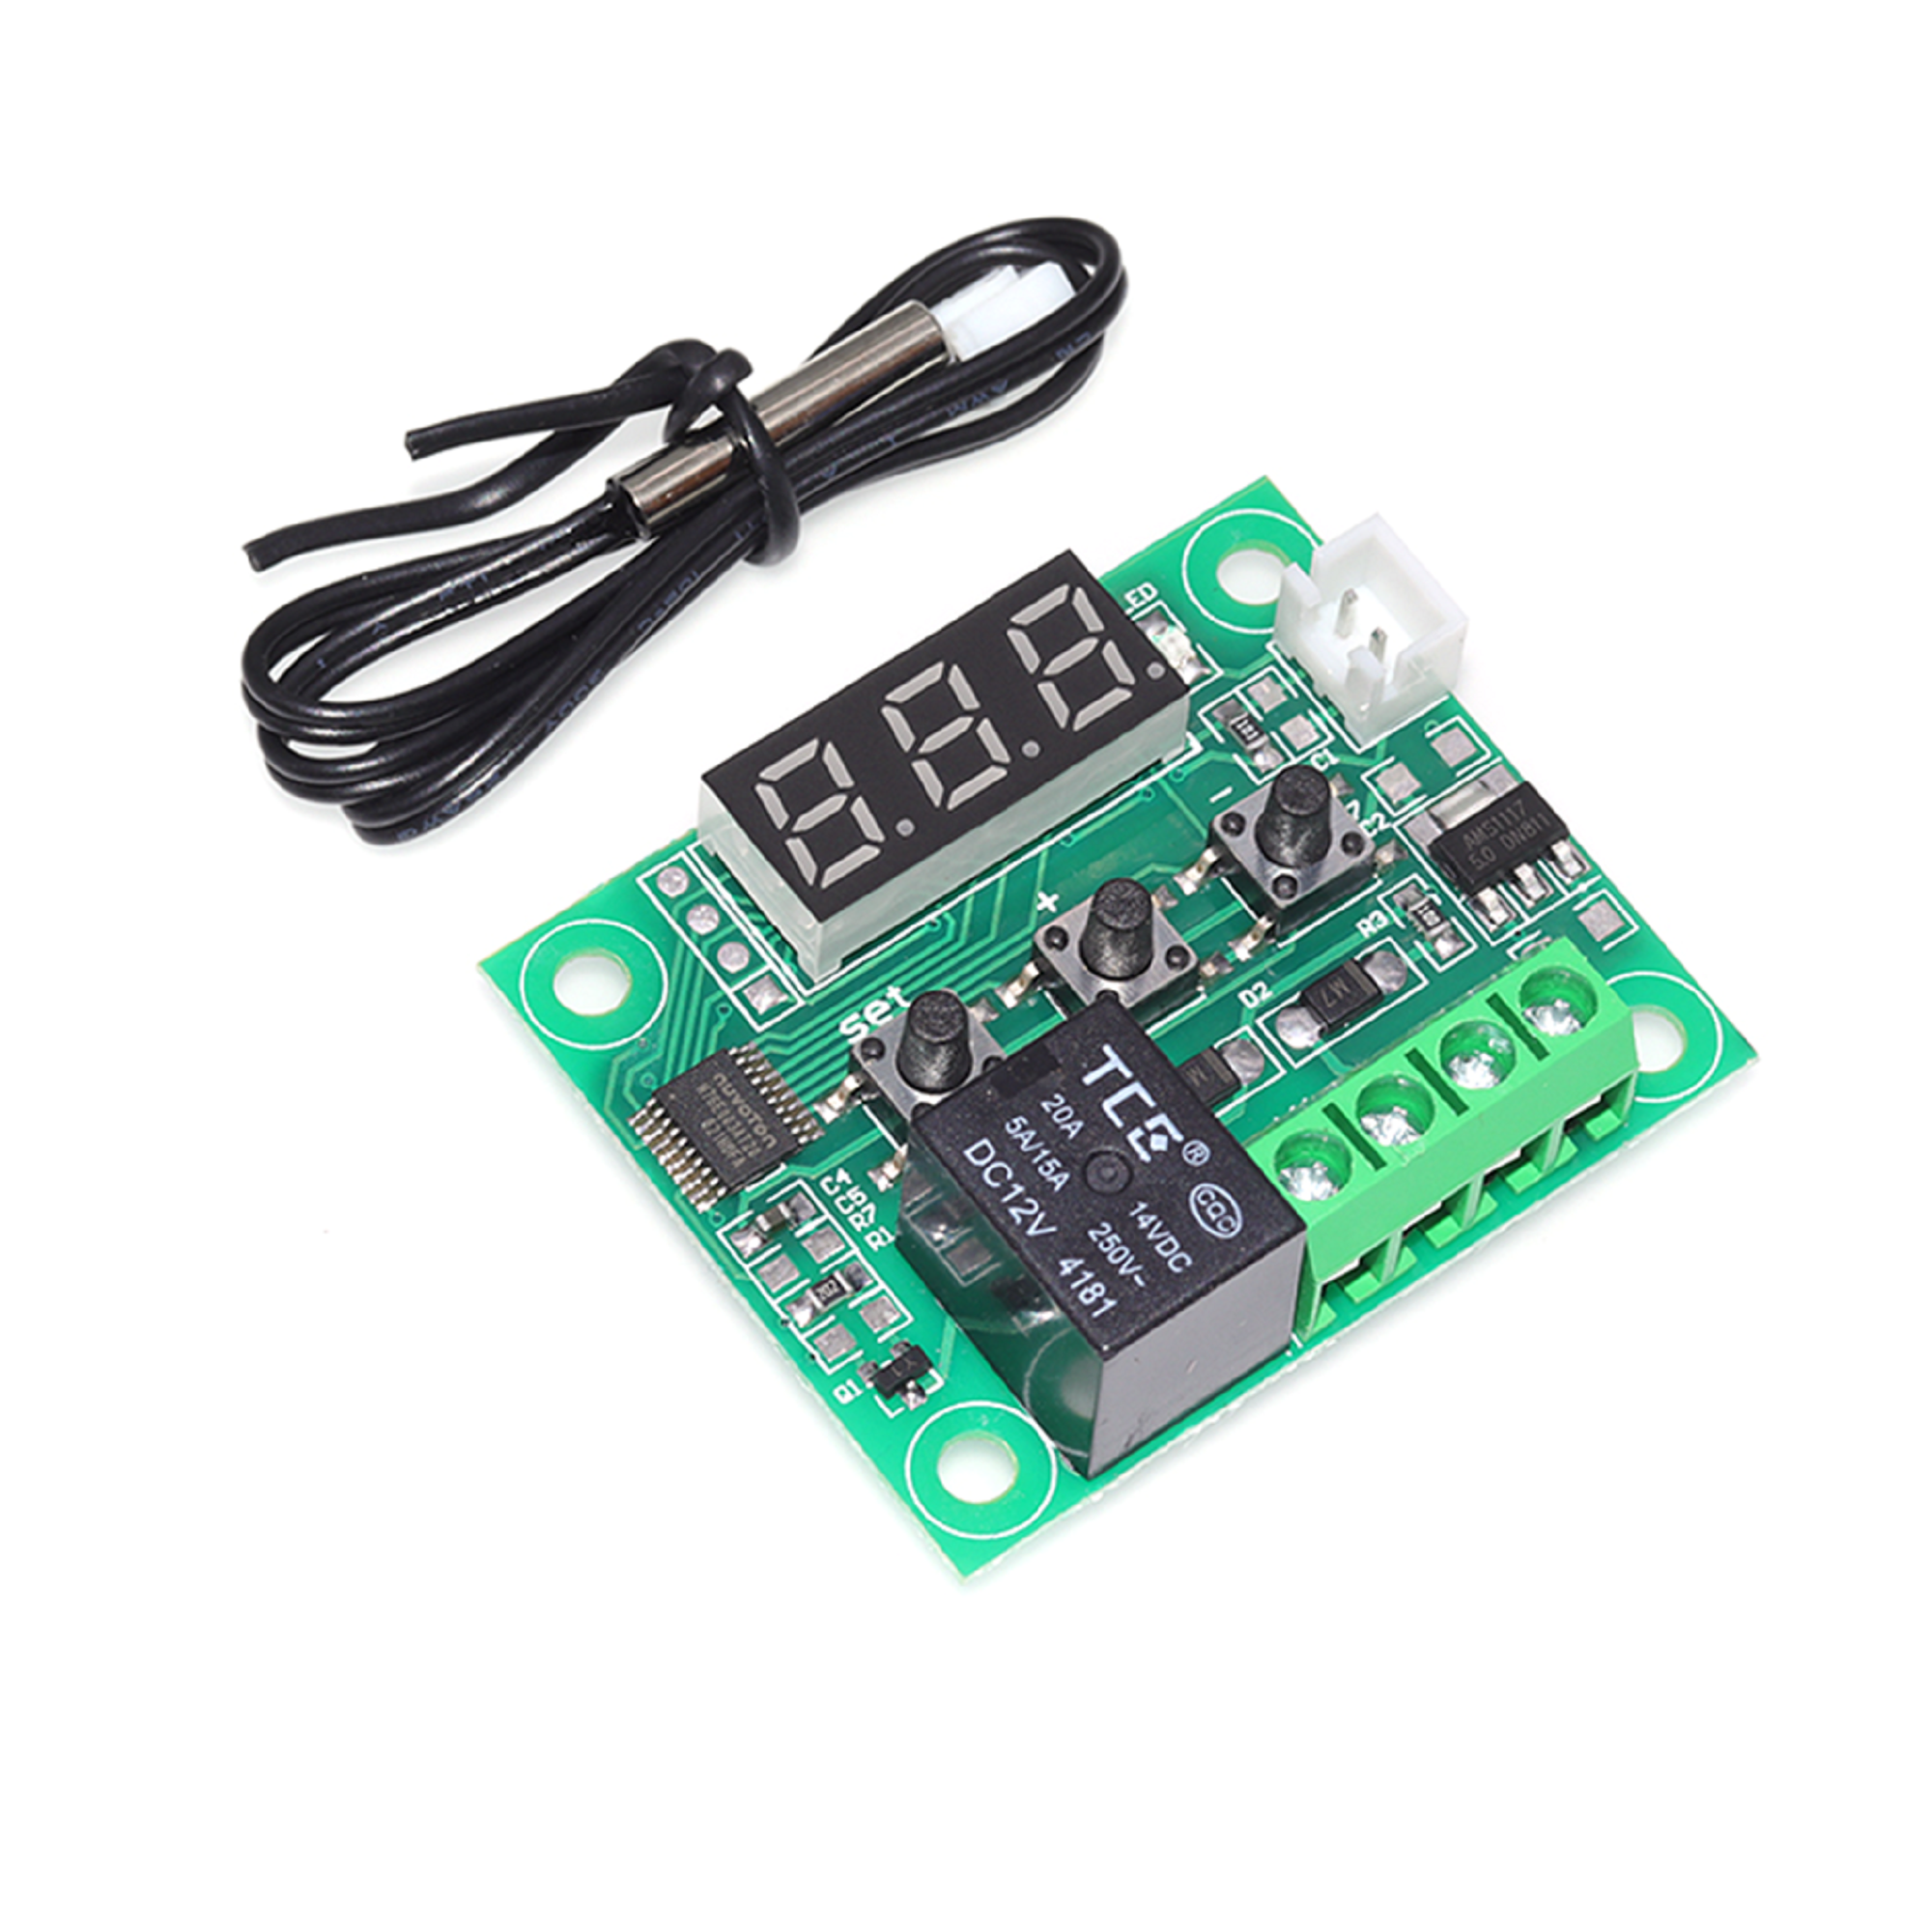 50-110°C W1209 Digital thermostat Temperature Control Switch DC 12V /& Sensor